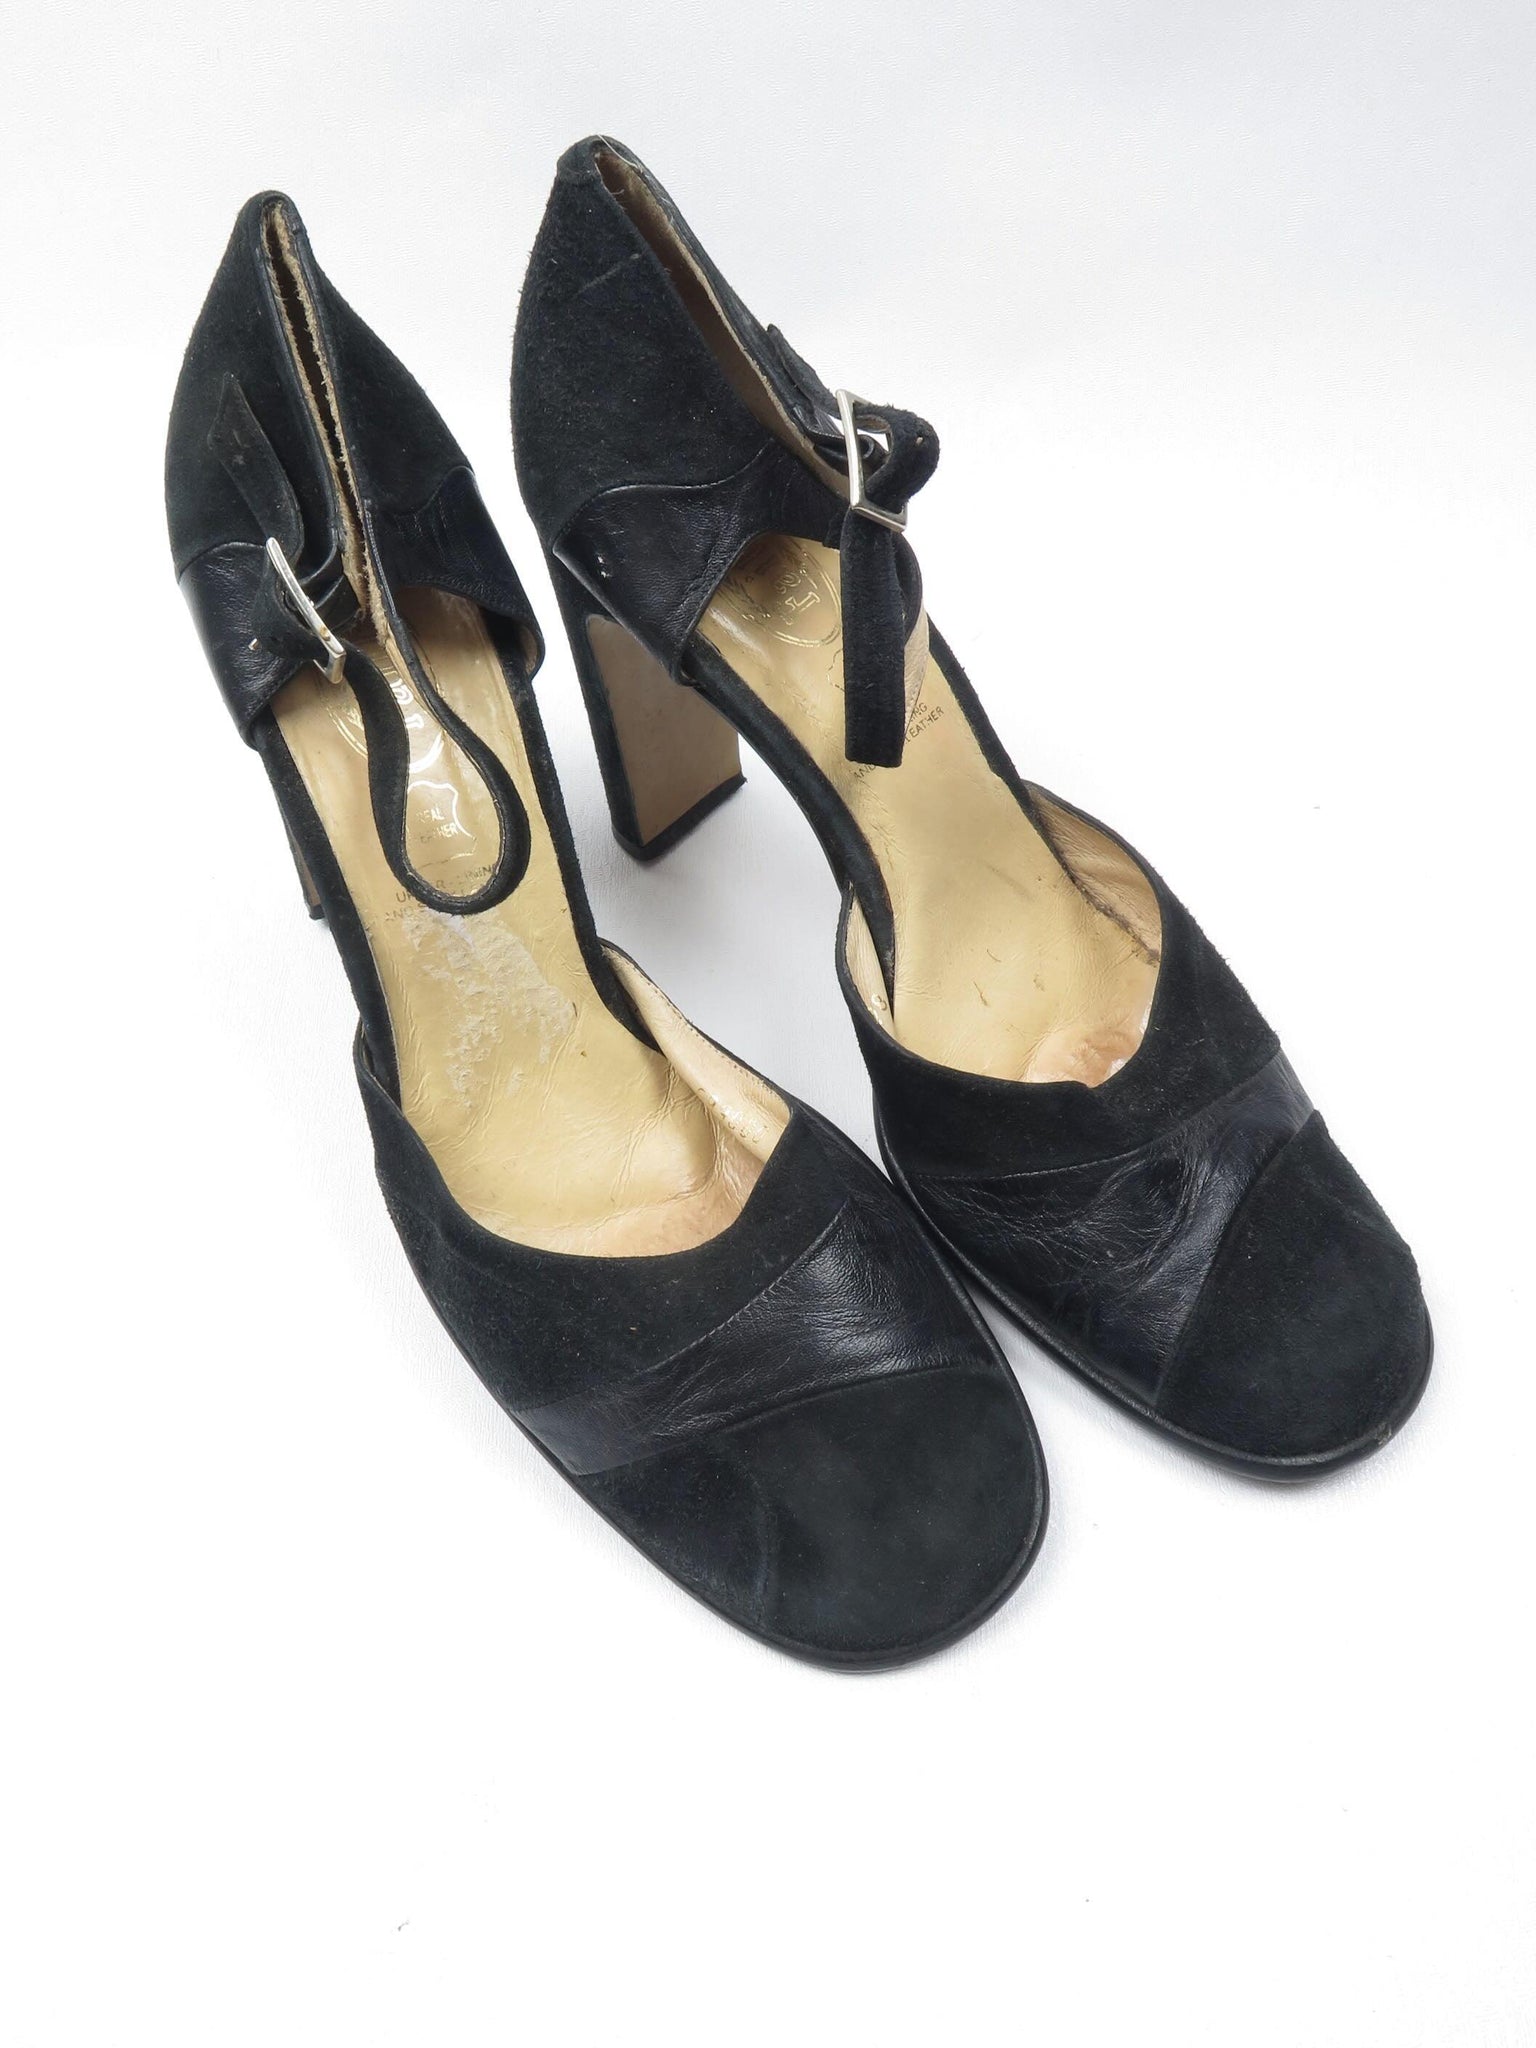 Black Suede & Leather Vintage Shoes 41/8 - The Harlequin